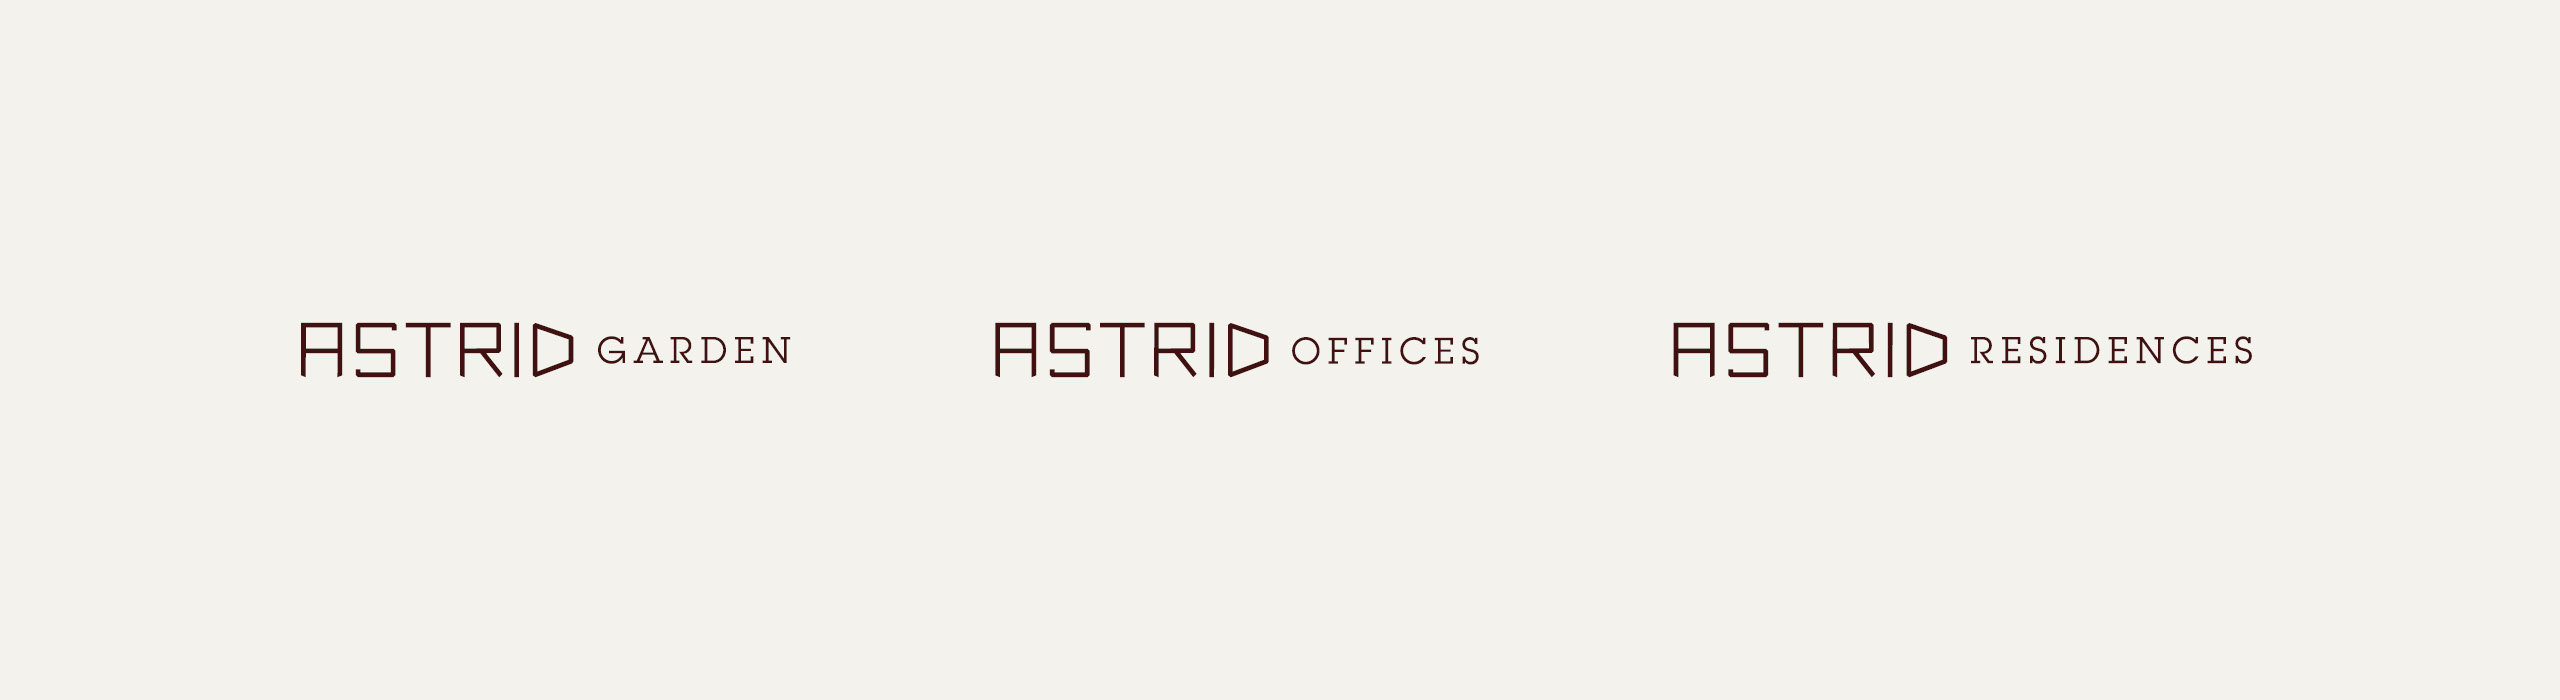 ASTRID_portfolio5_NEW